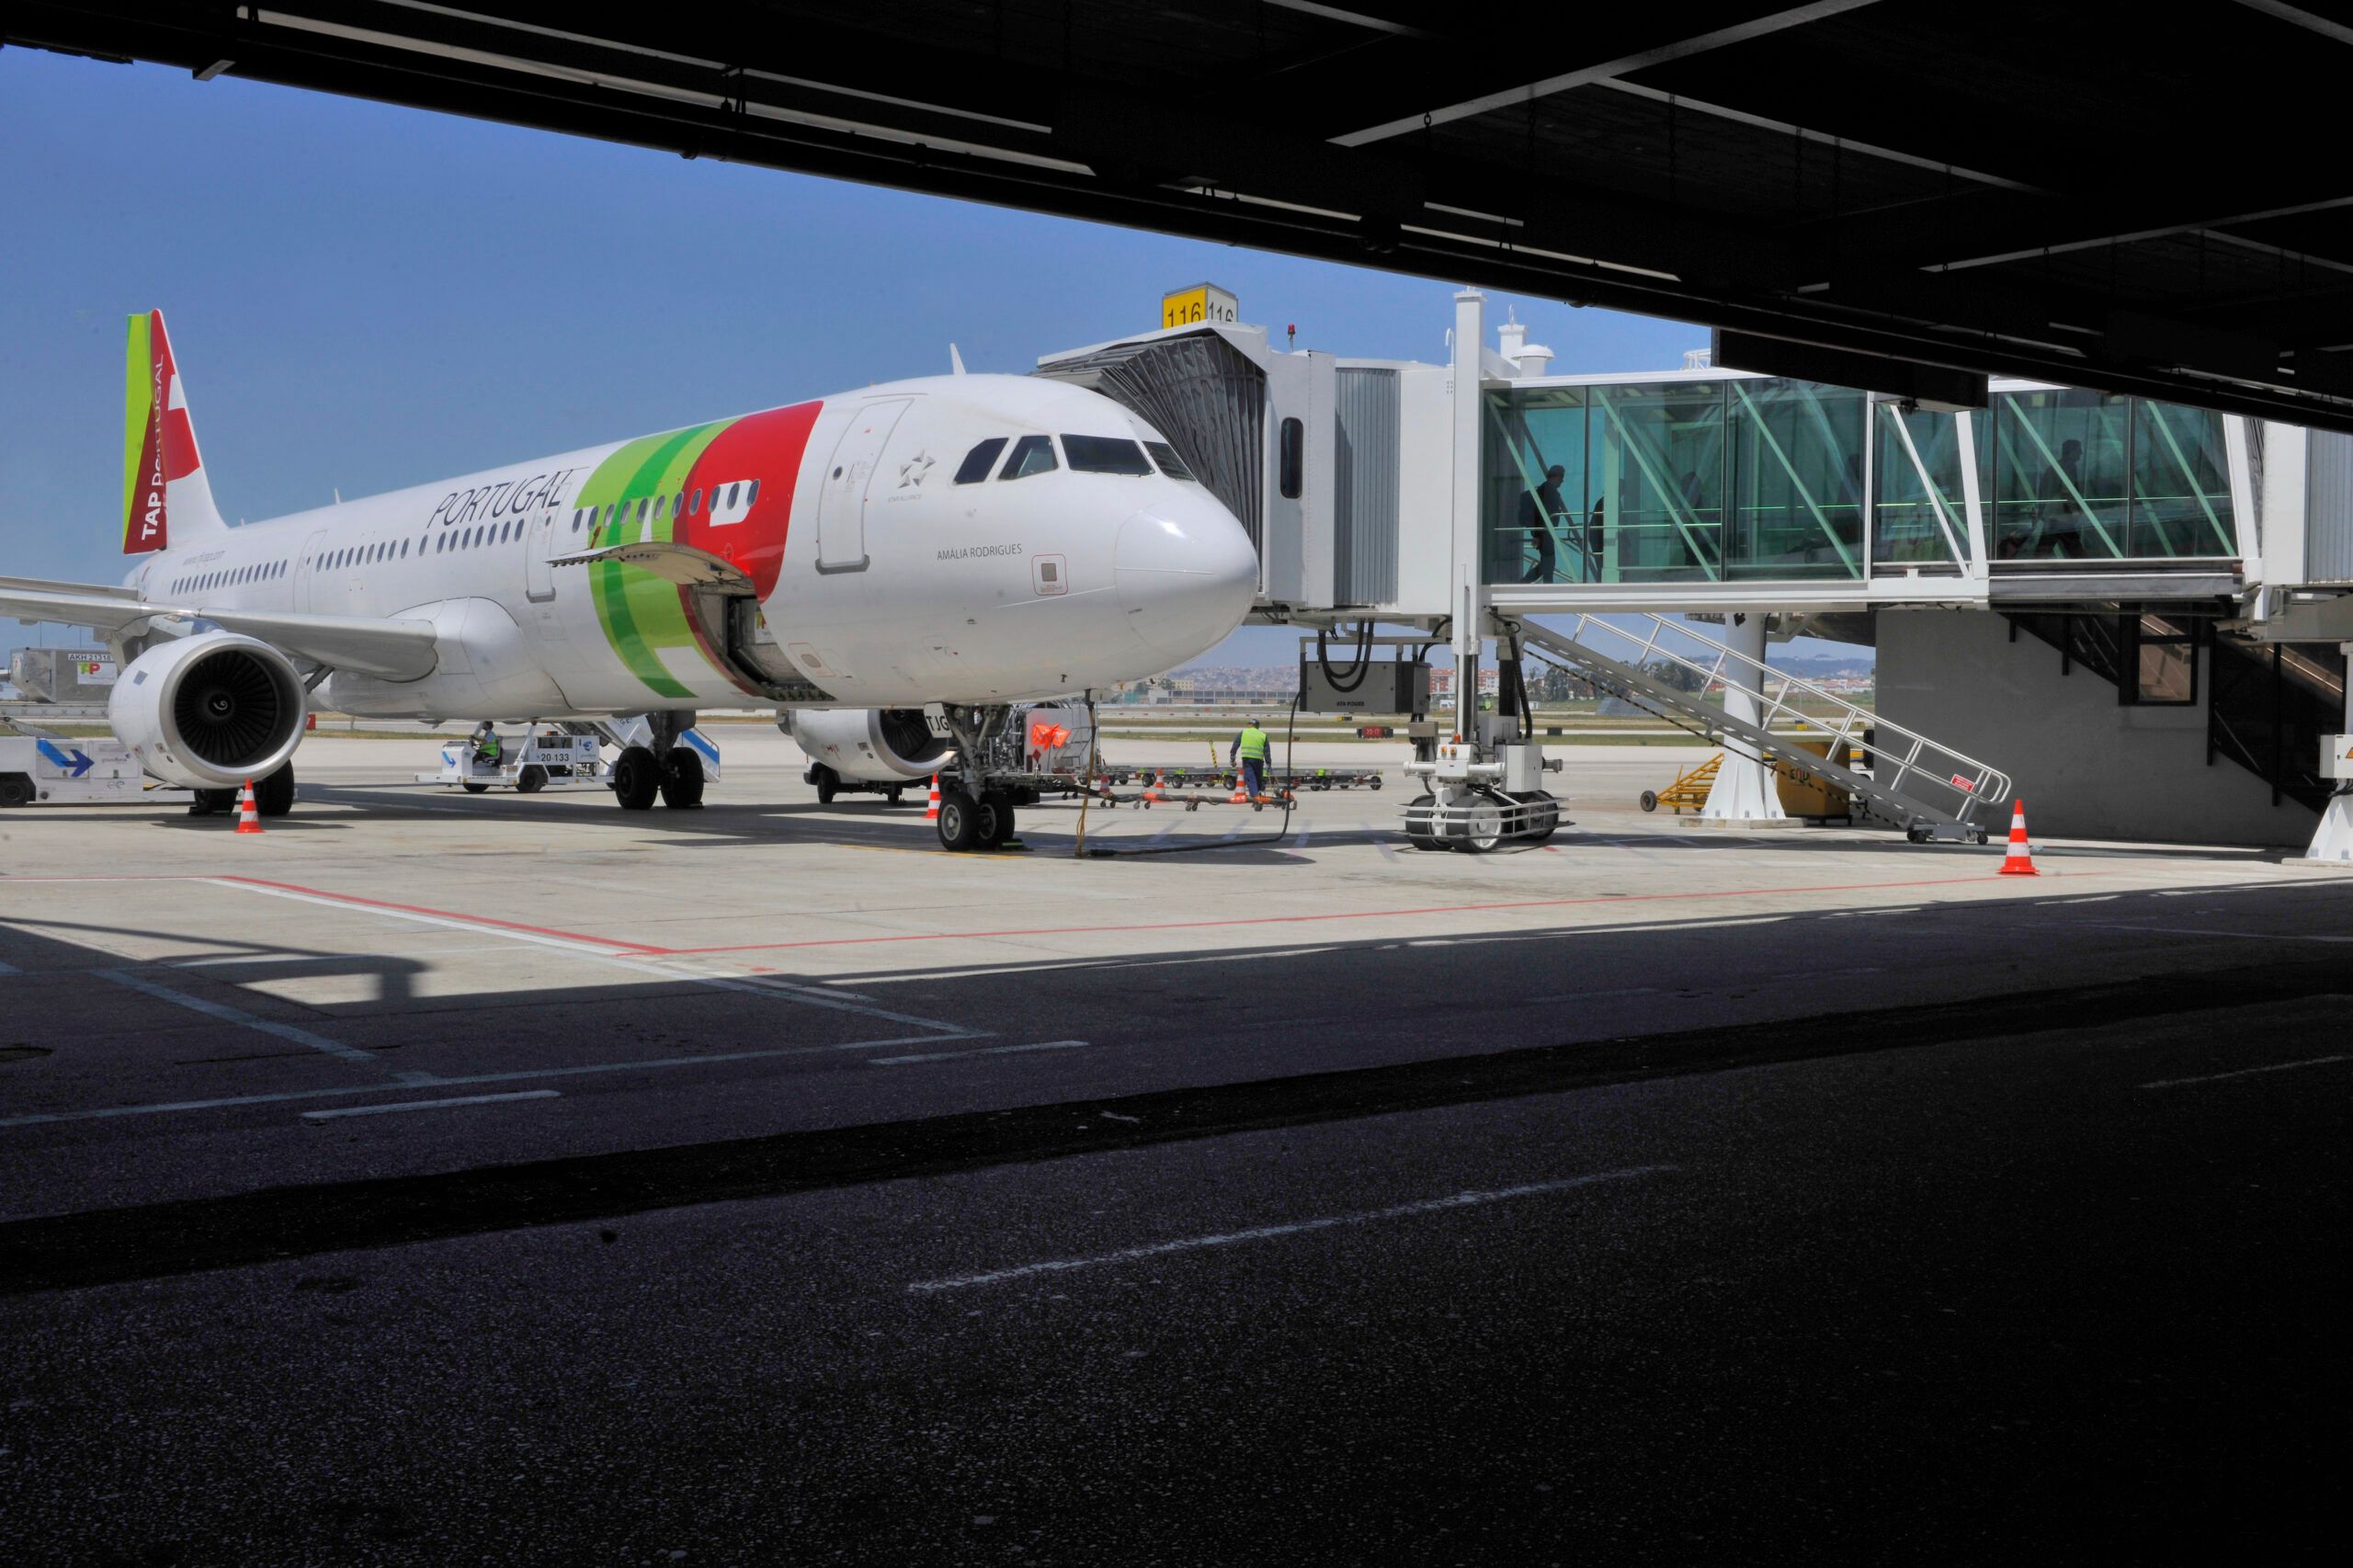 Portugal Airport Strike Cancels 300+ Flights